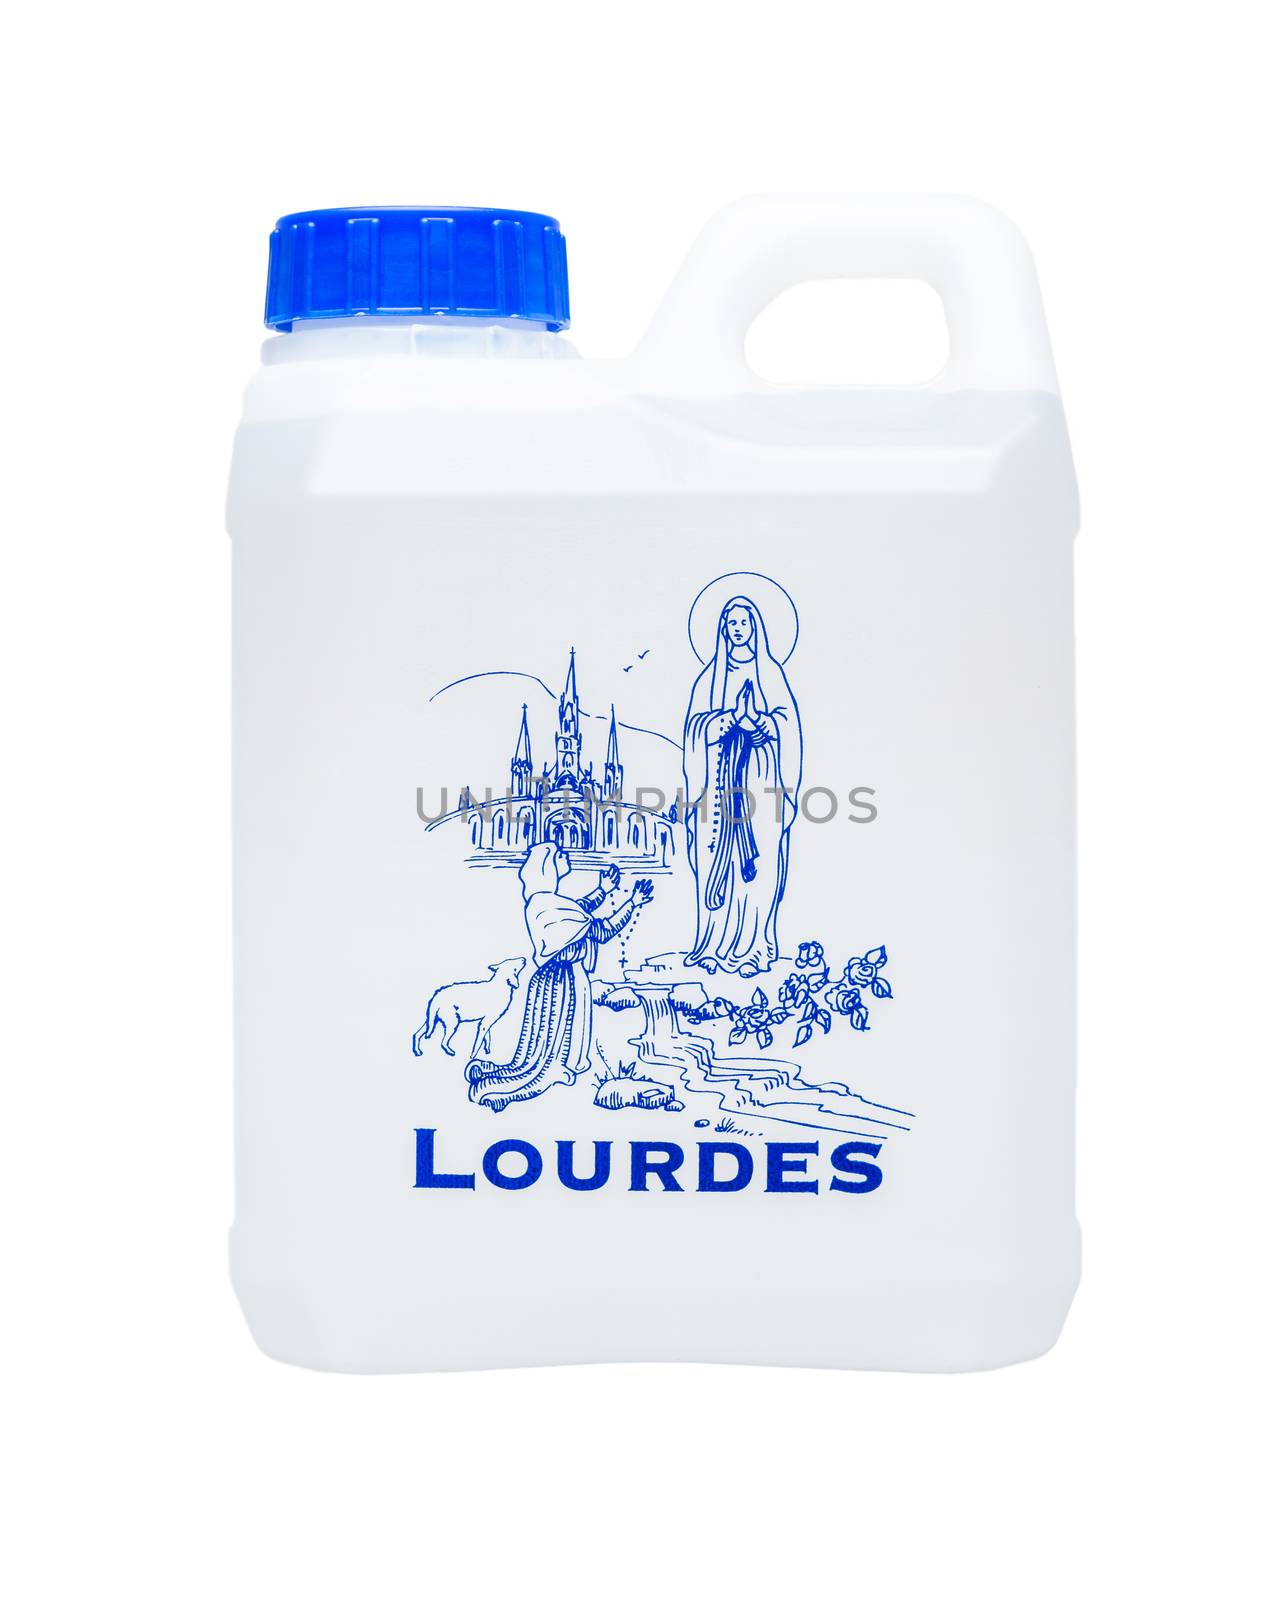 Lourdes plastic water bottle isolated on white background